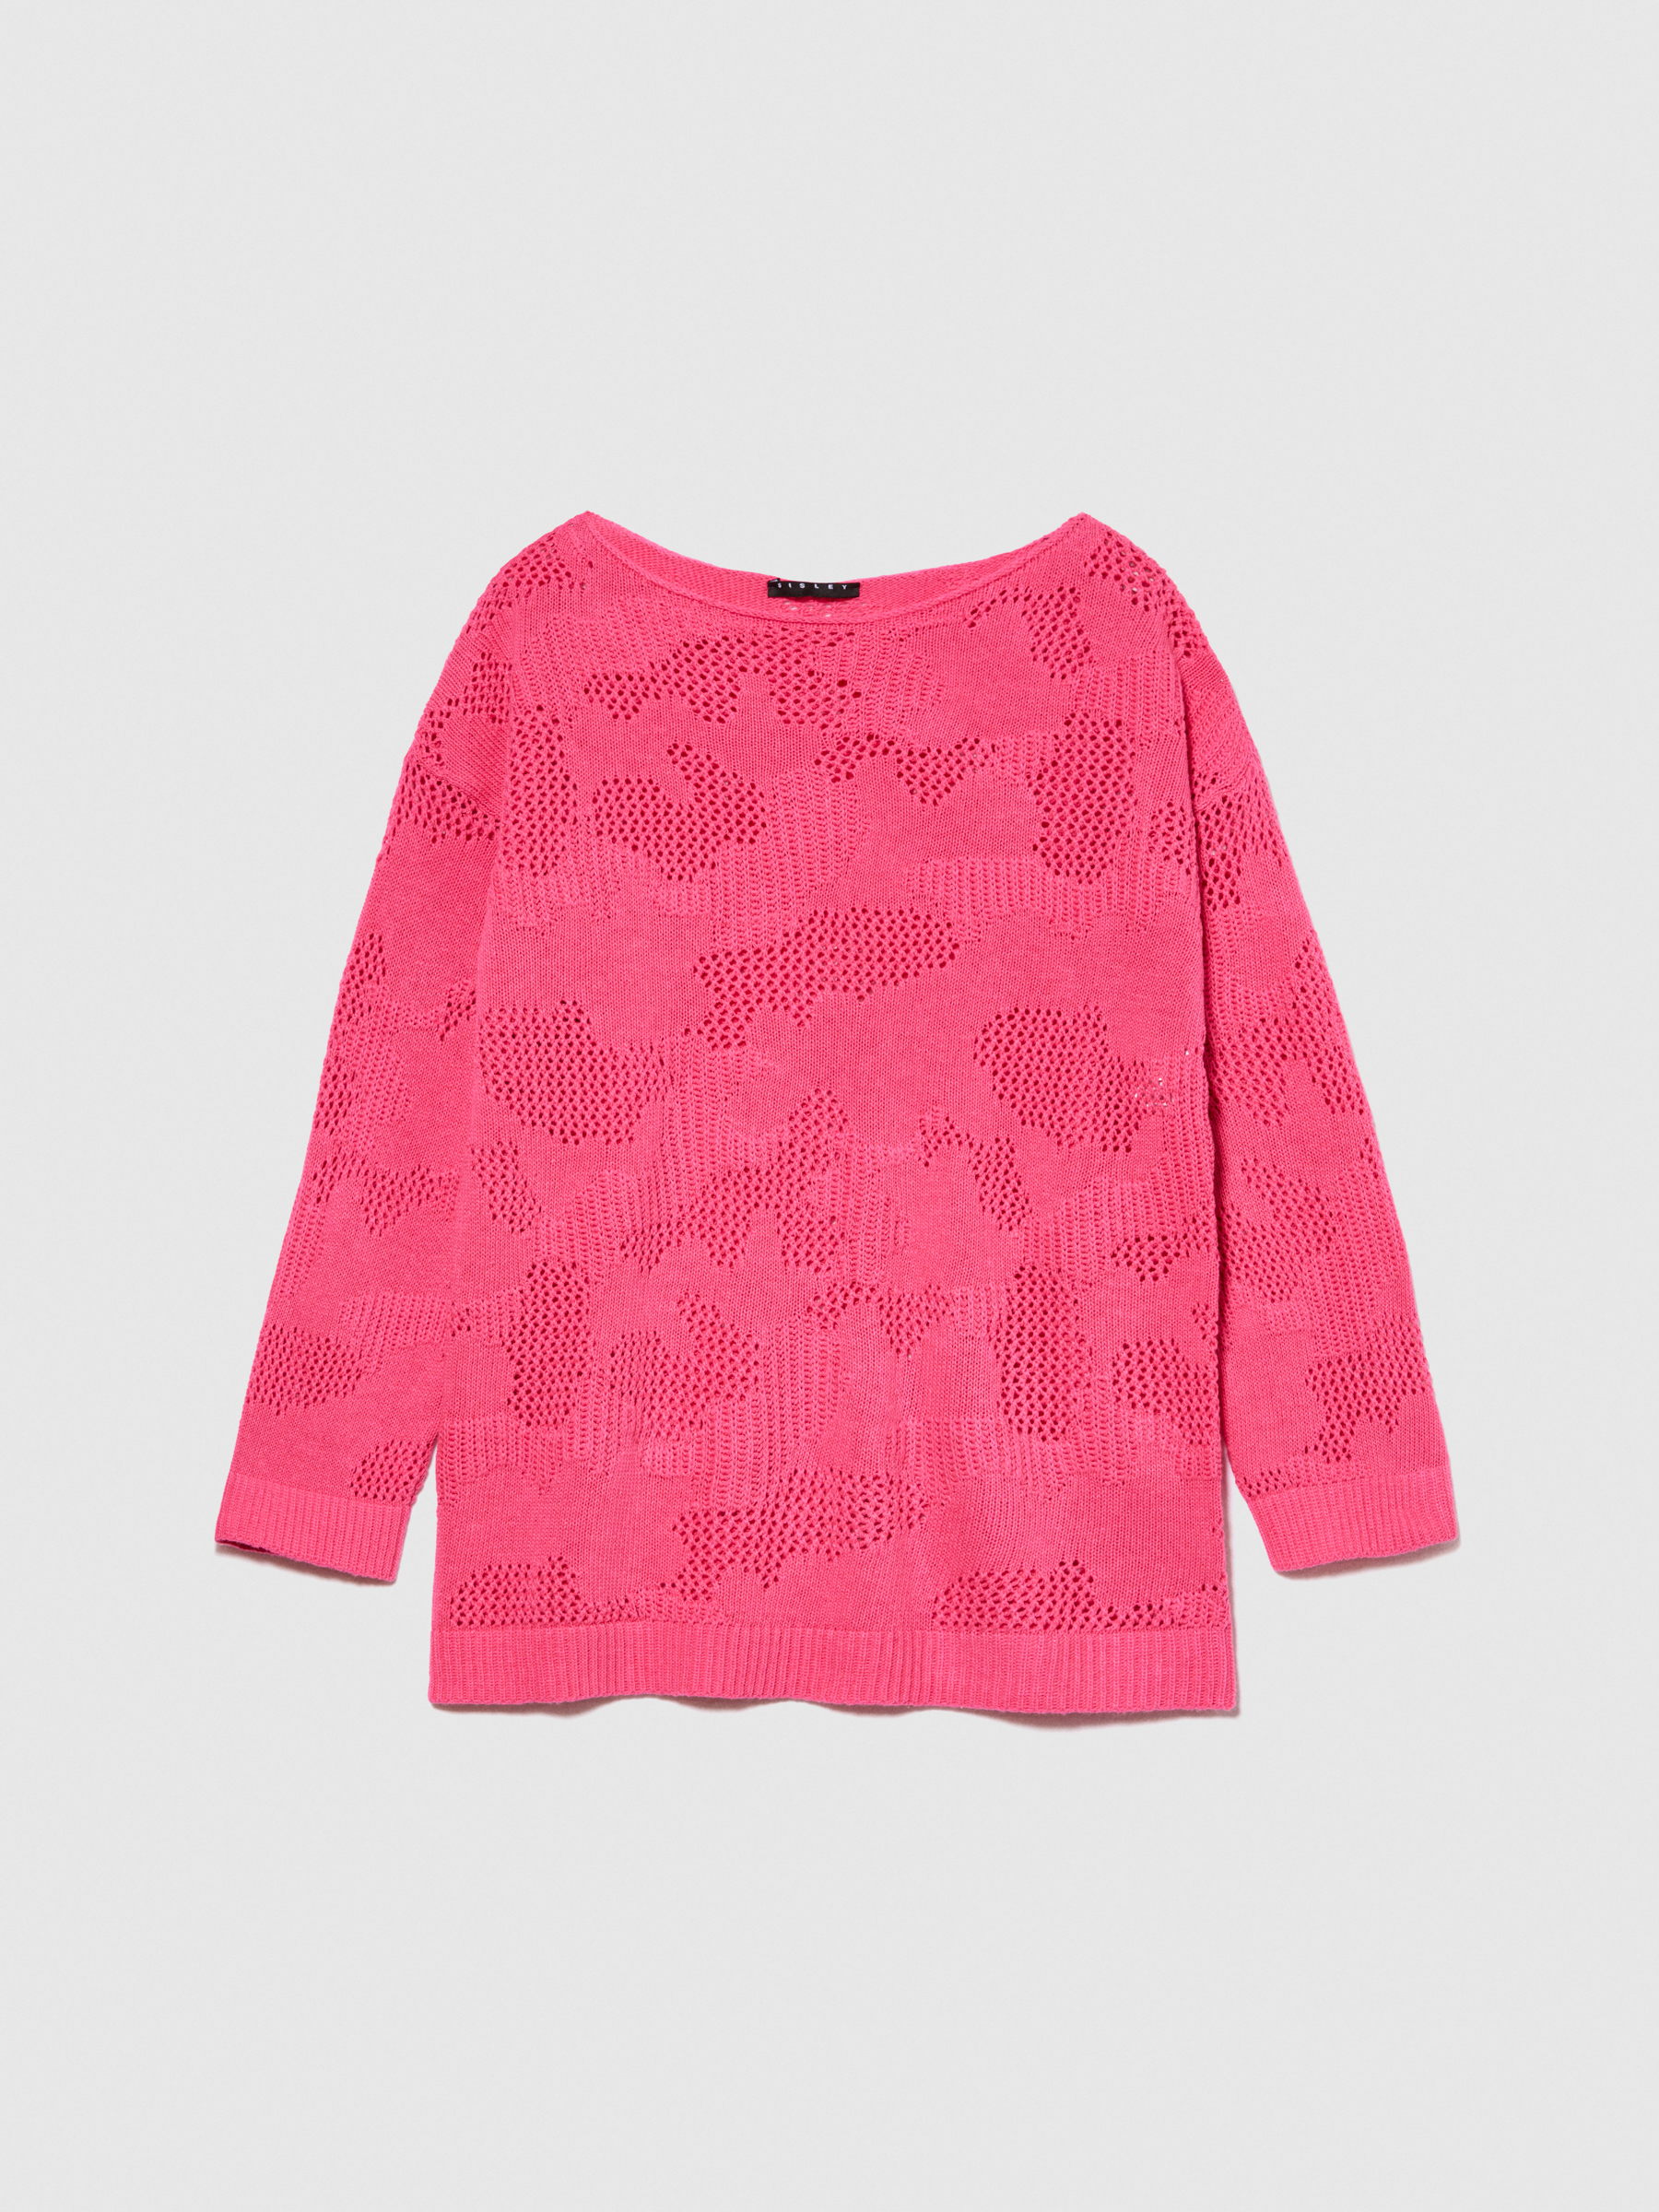 Sisley Young - Oversized Sweater, Woman, Pink, Size: XS